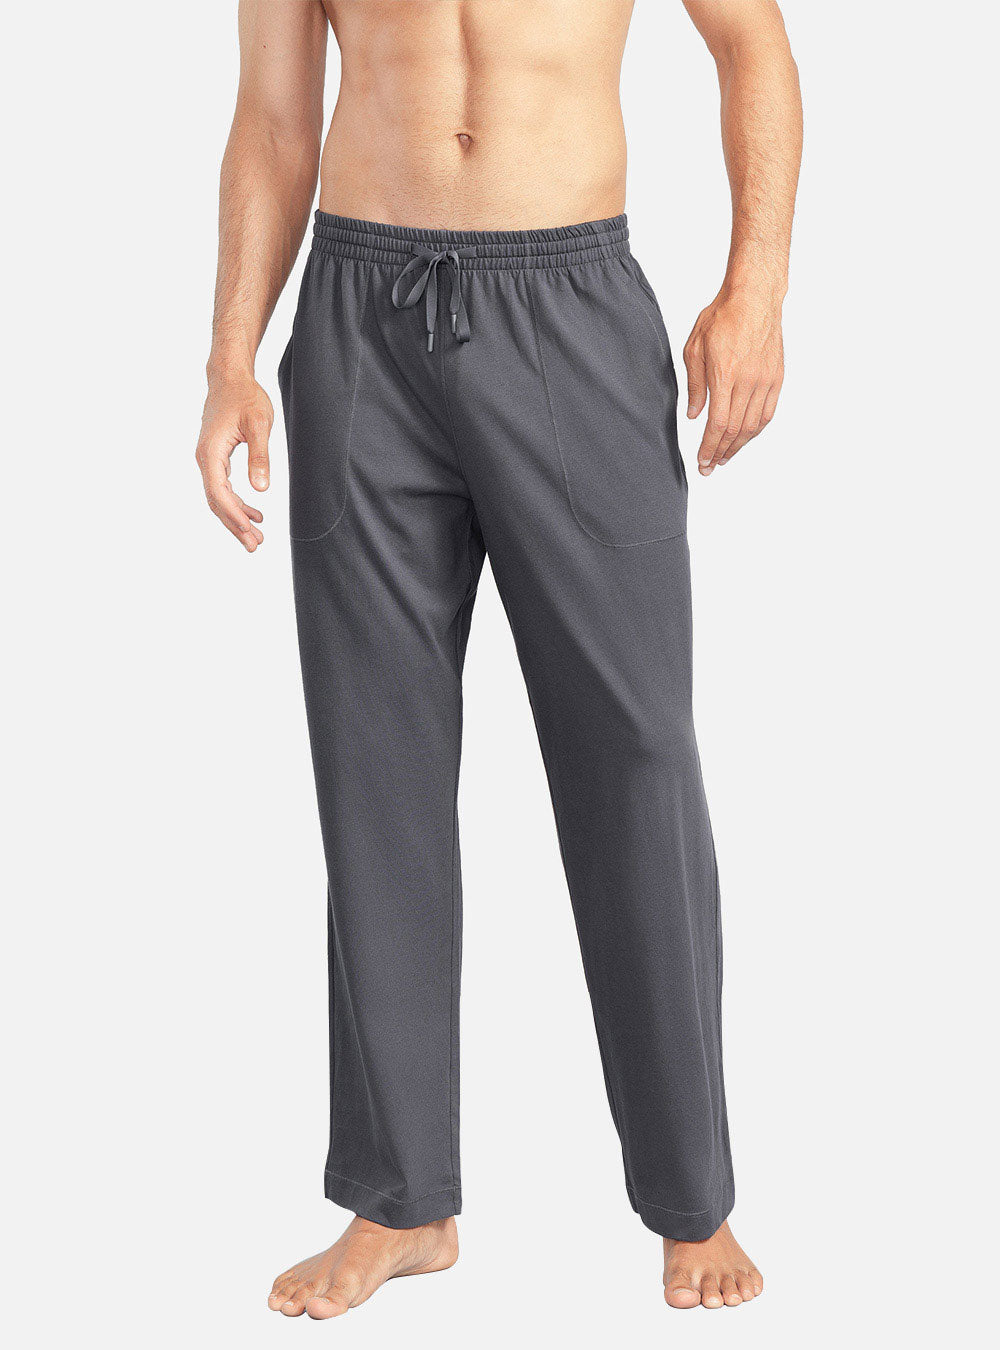 David Archy 2 Packs Cotton Lounge Sleep Pants Men's 4 seasons Comfy Soft  Cotton Pajama Pants